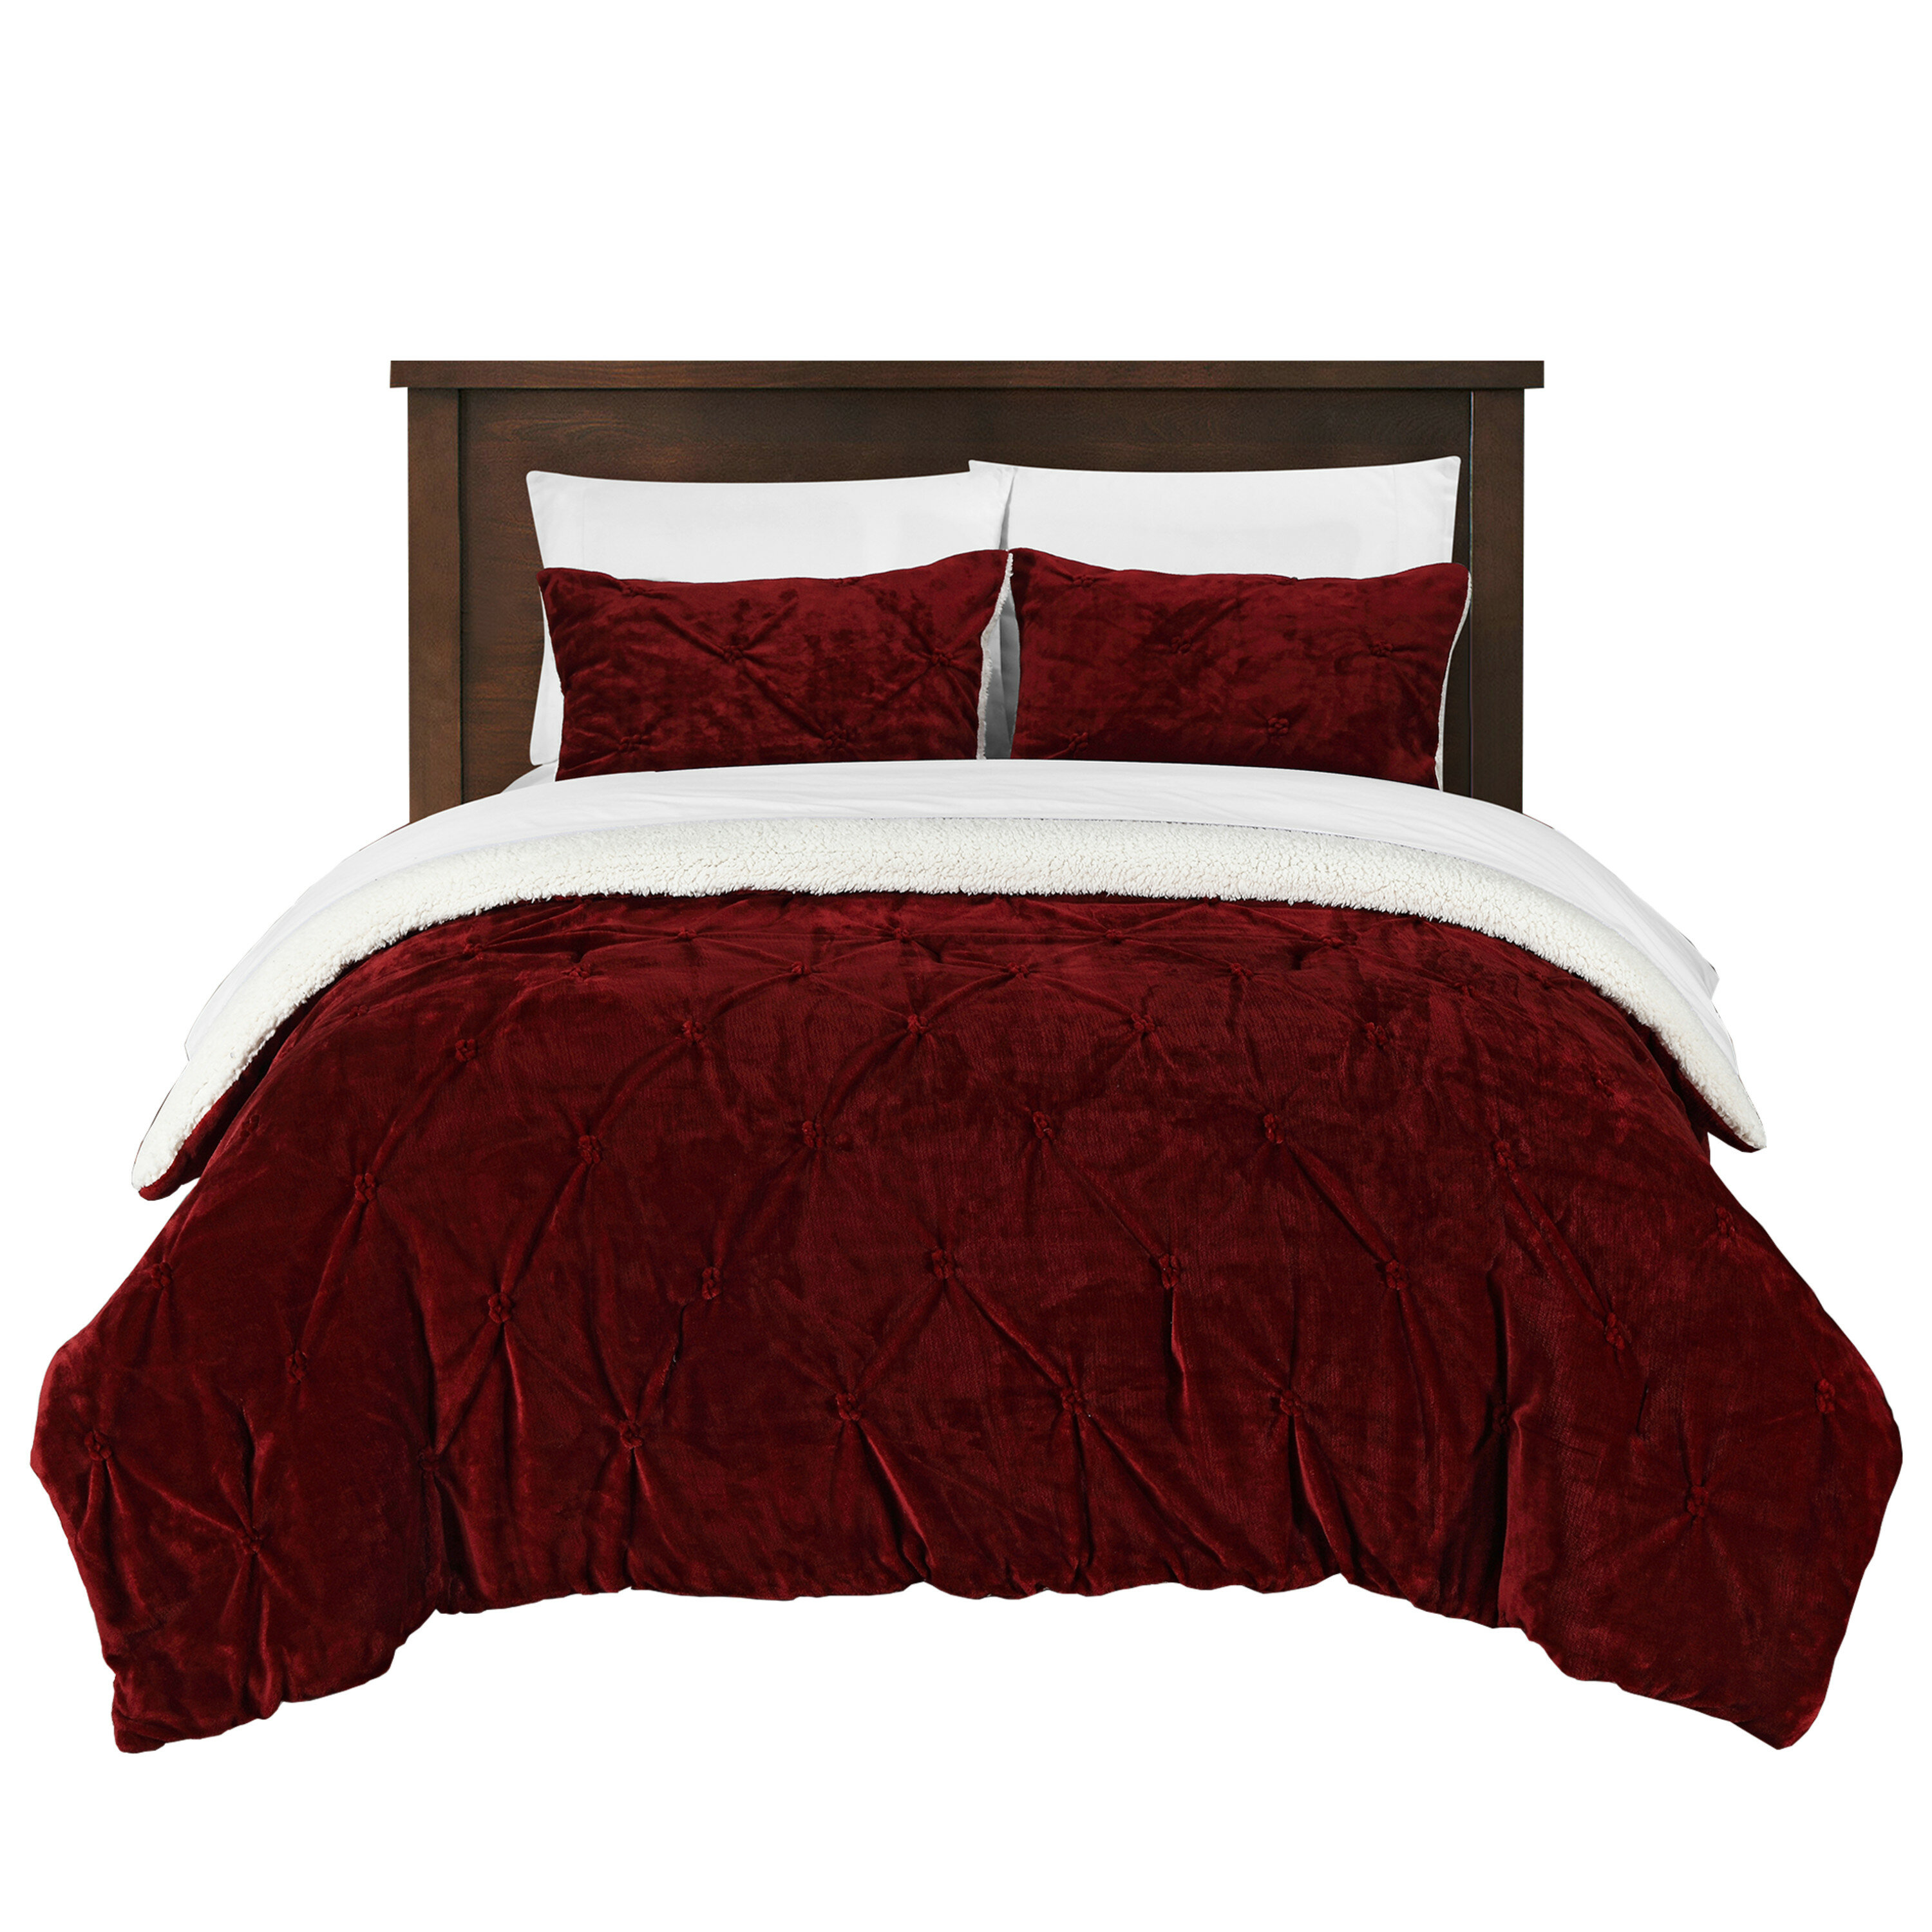 Home Bedding 7 Piece Satin Bedding Sets Black Super King Bed Size Duvet Cover Fitted Sheet